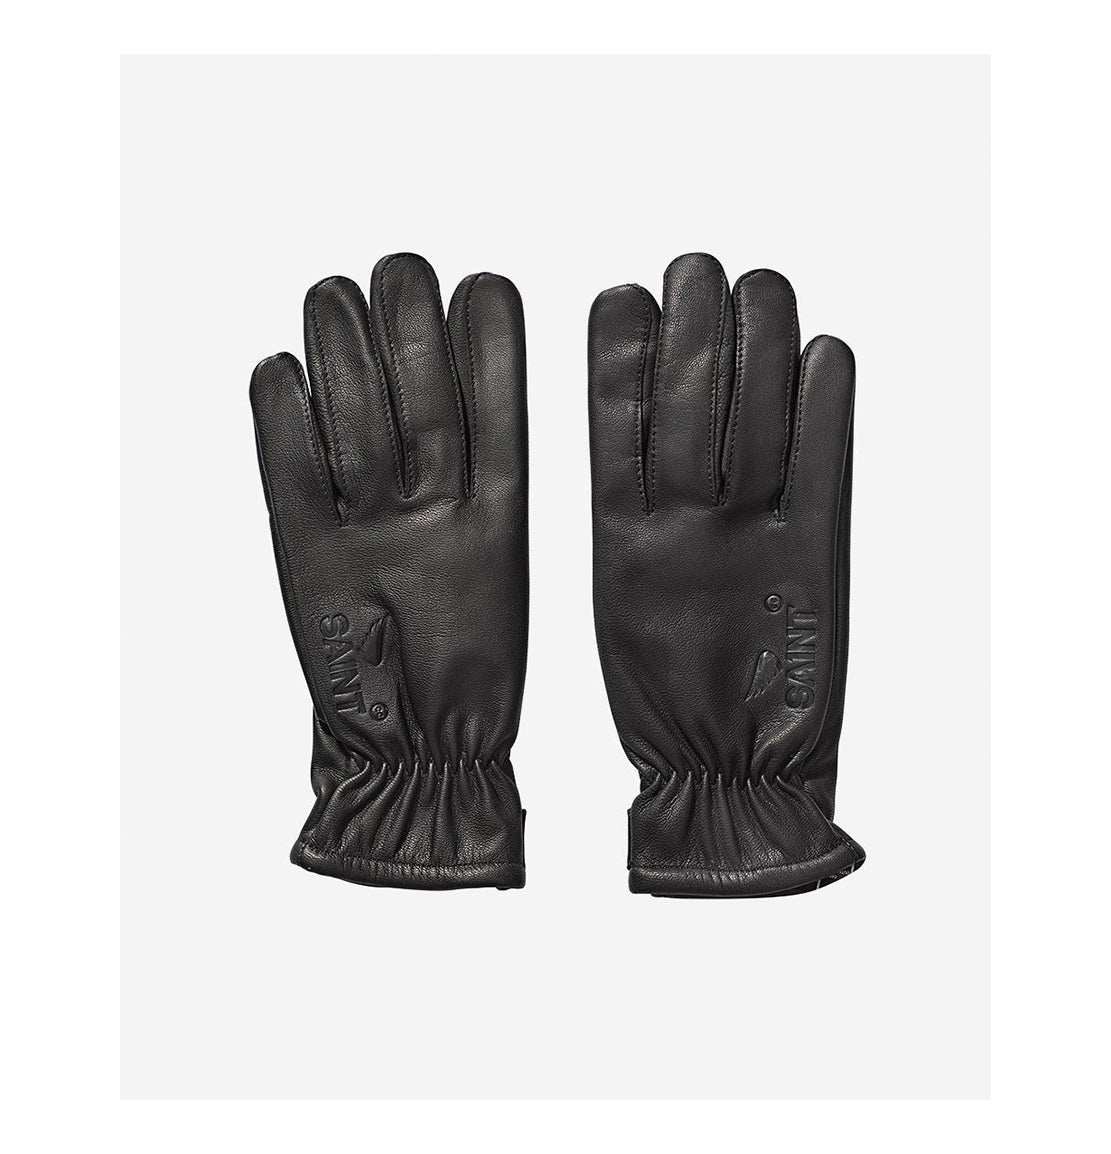 Saint leather gloves